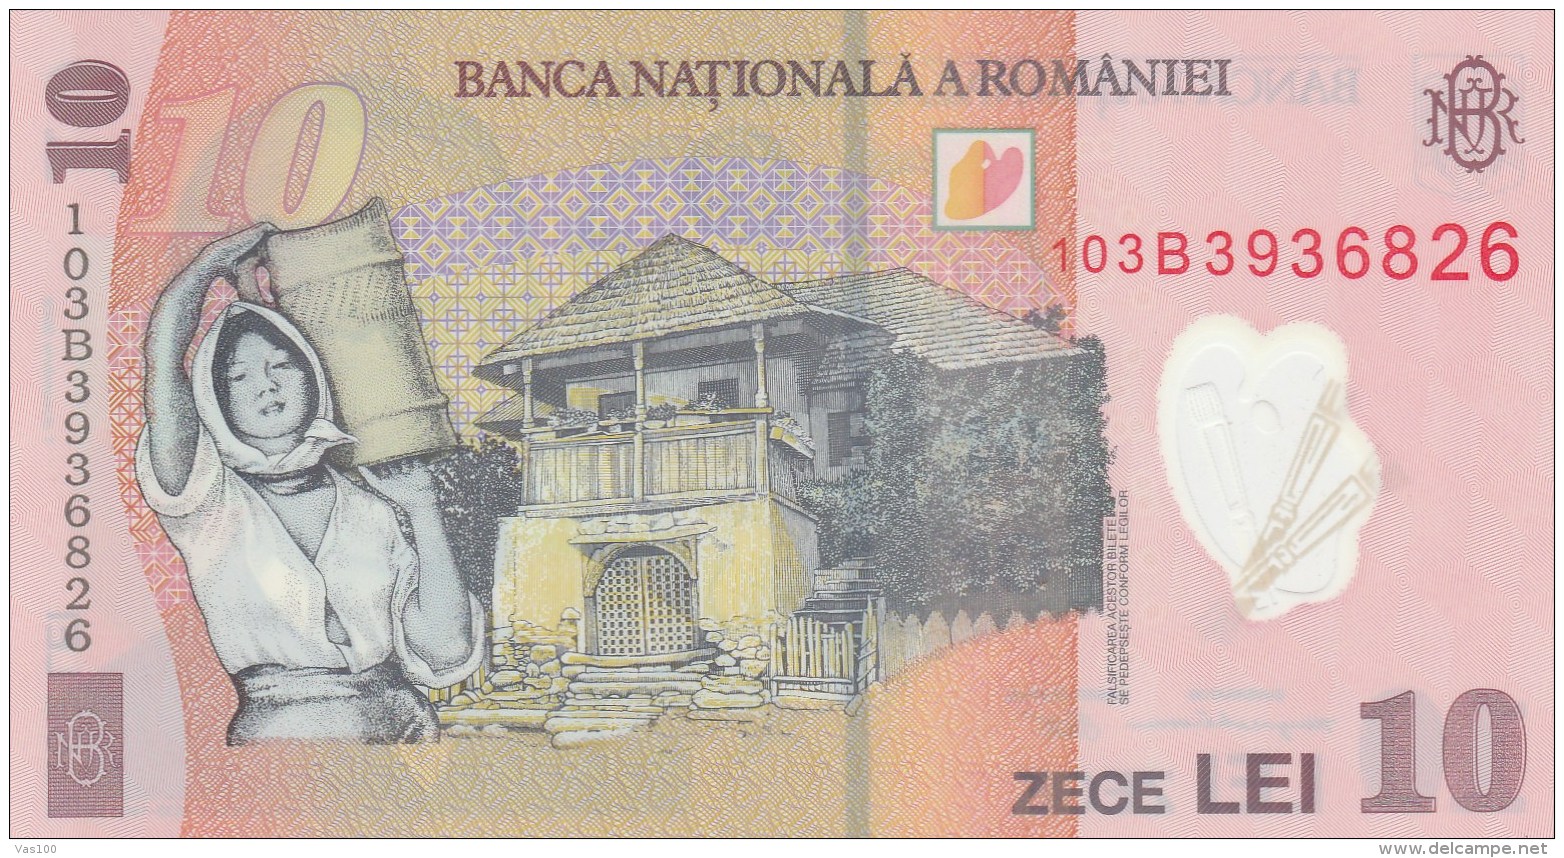 10 LEI X 2, CONSECUTIVE SERIES, 2008, PLASTIC BANKNOTE, ROMANIA. - Rumänien